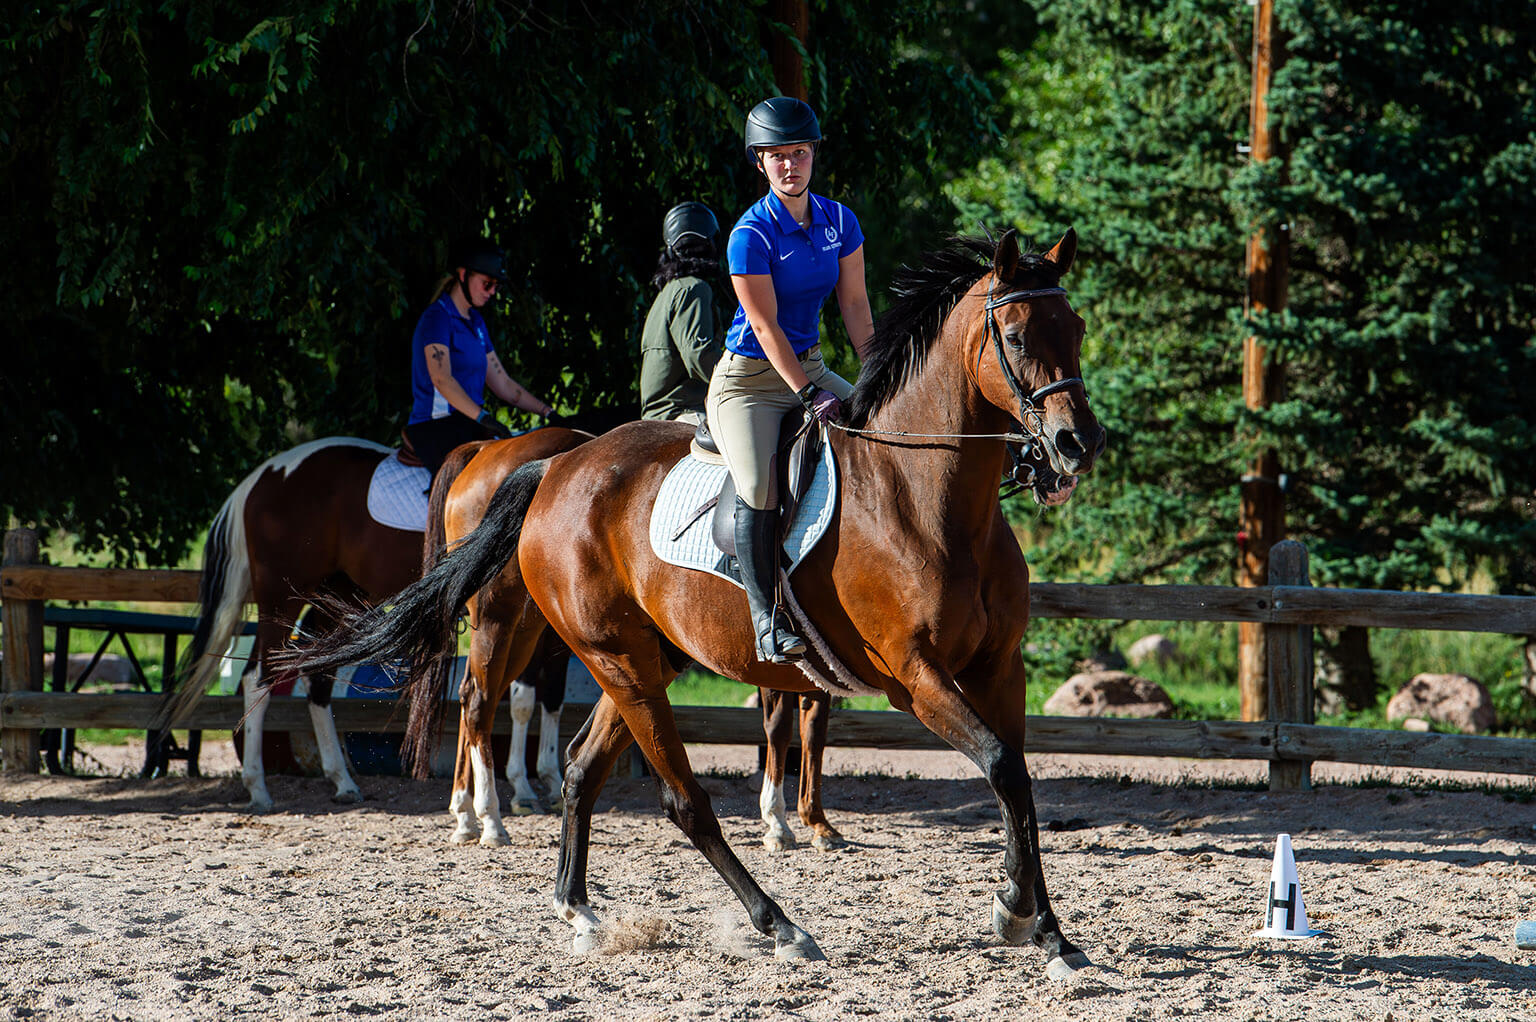 Cadet riding horse